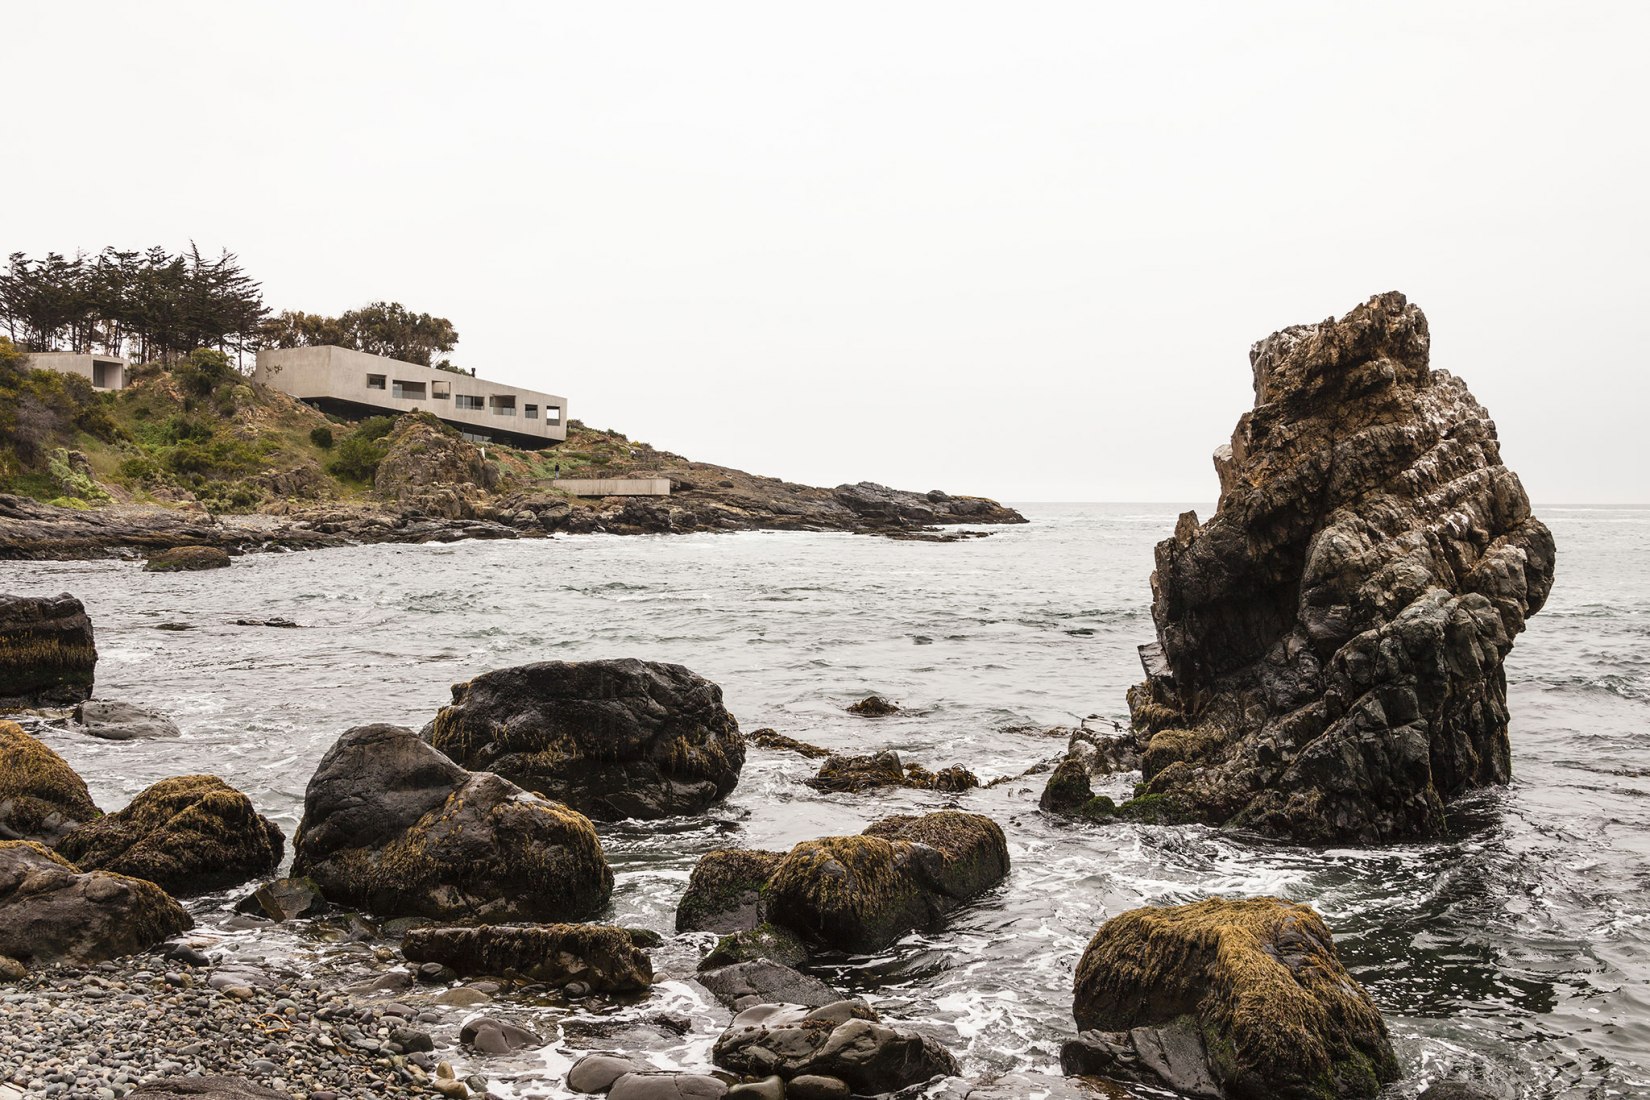 View from the seashore. Casa bahia azul by Felipe Assadi and Francisca Pulido. Photograph © Fernando Alda